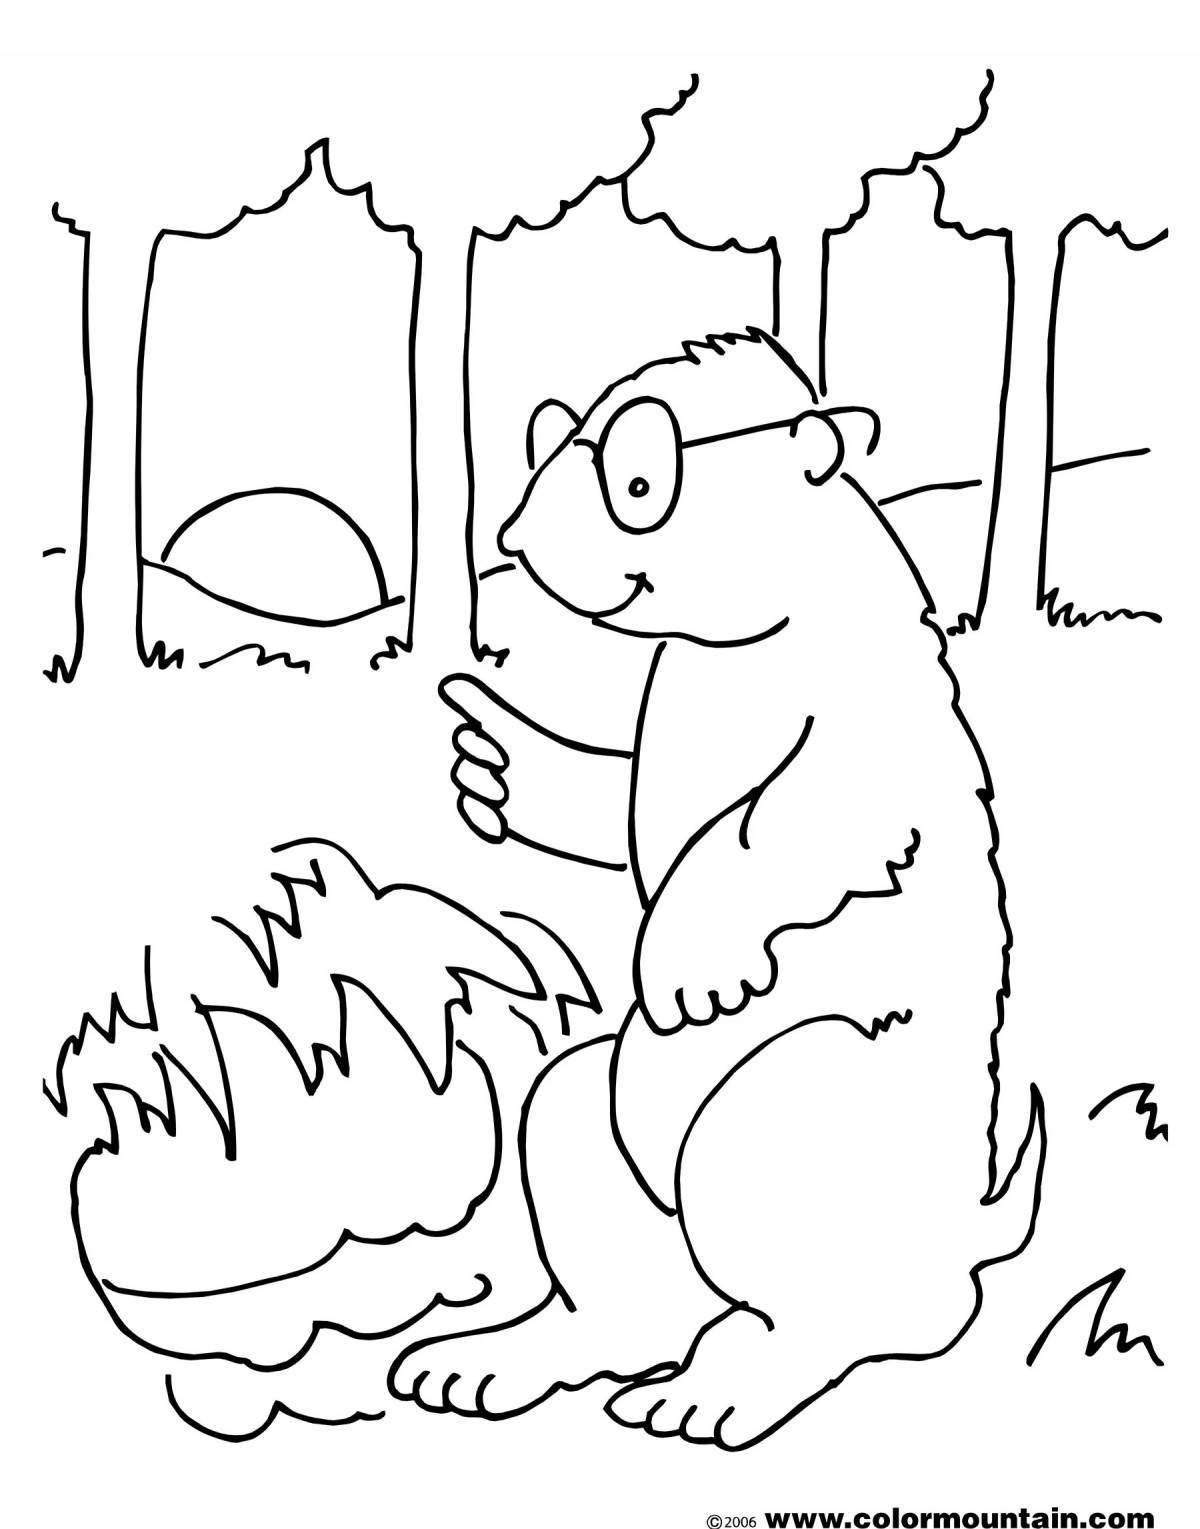 Groundhog Day fun coloring book